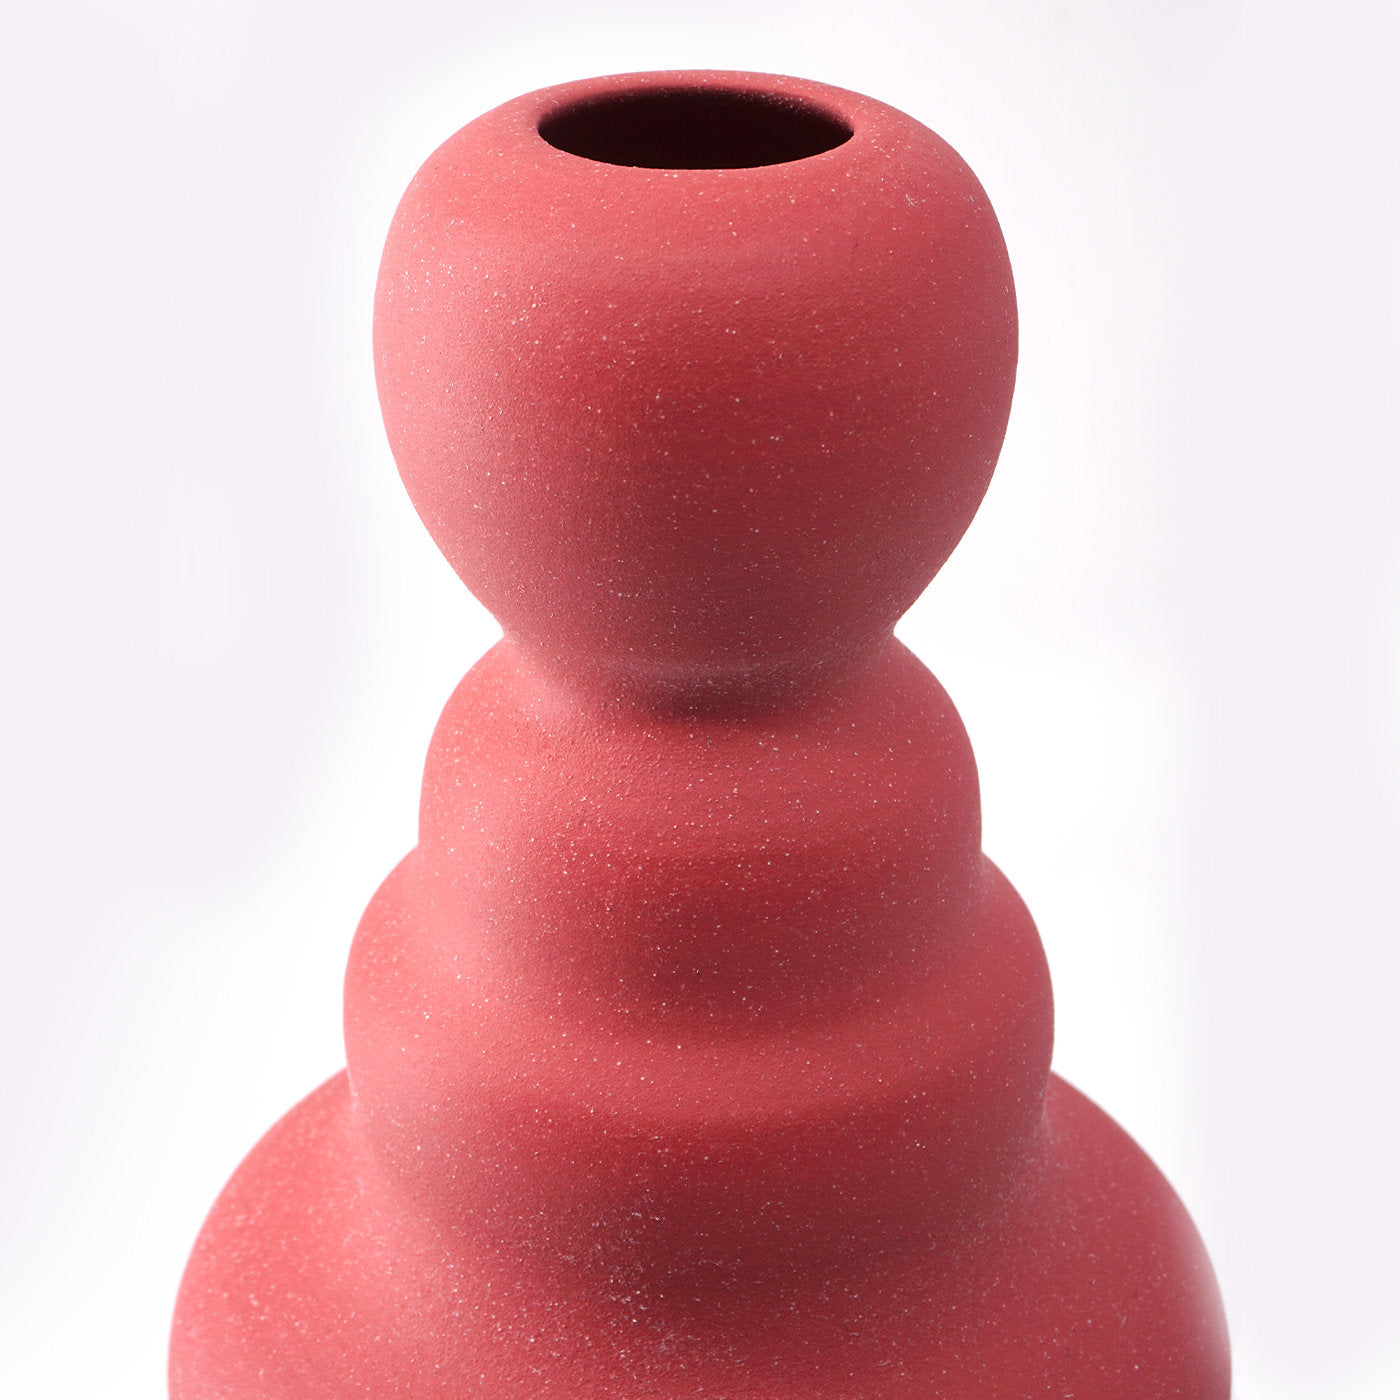 Crisalide Red Vase #5 - Alternative view 3